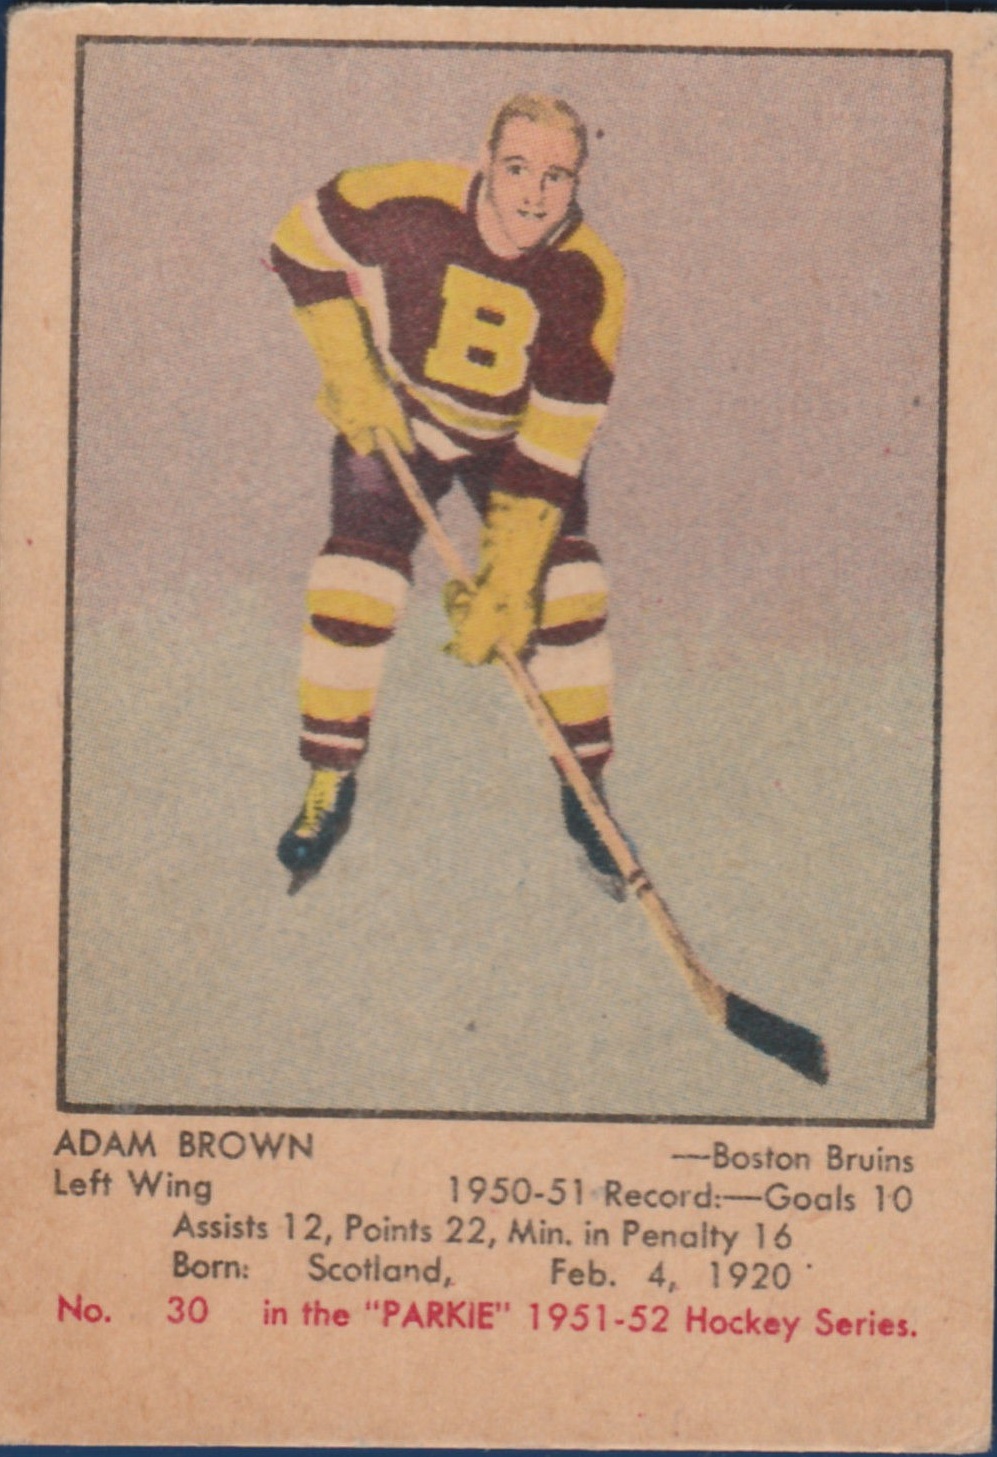  Adam Brown player image